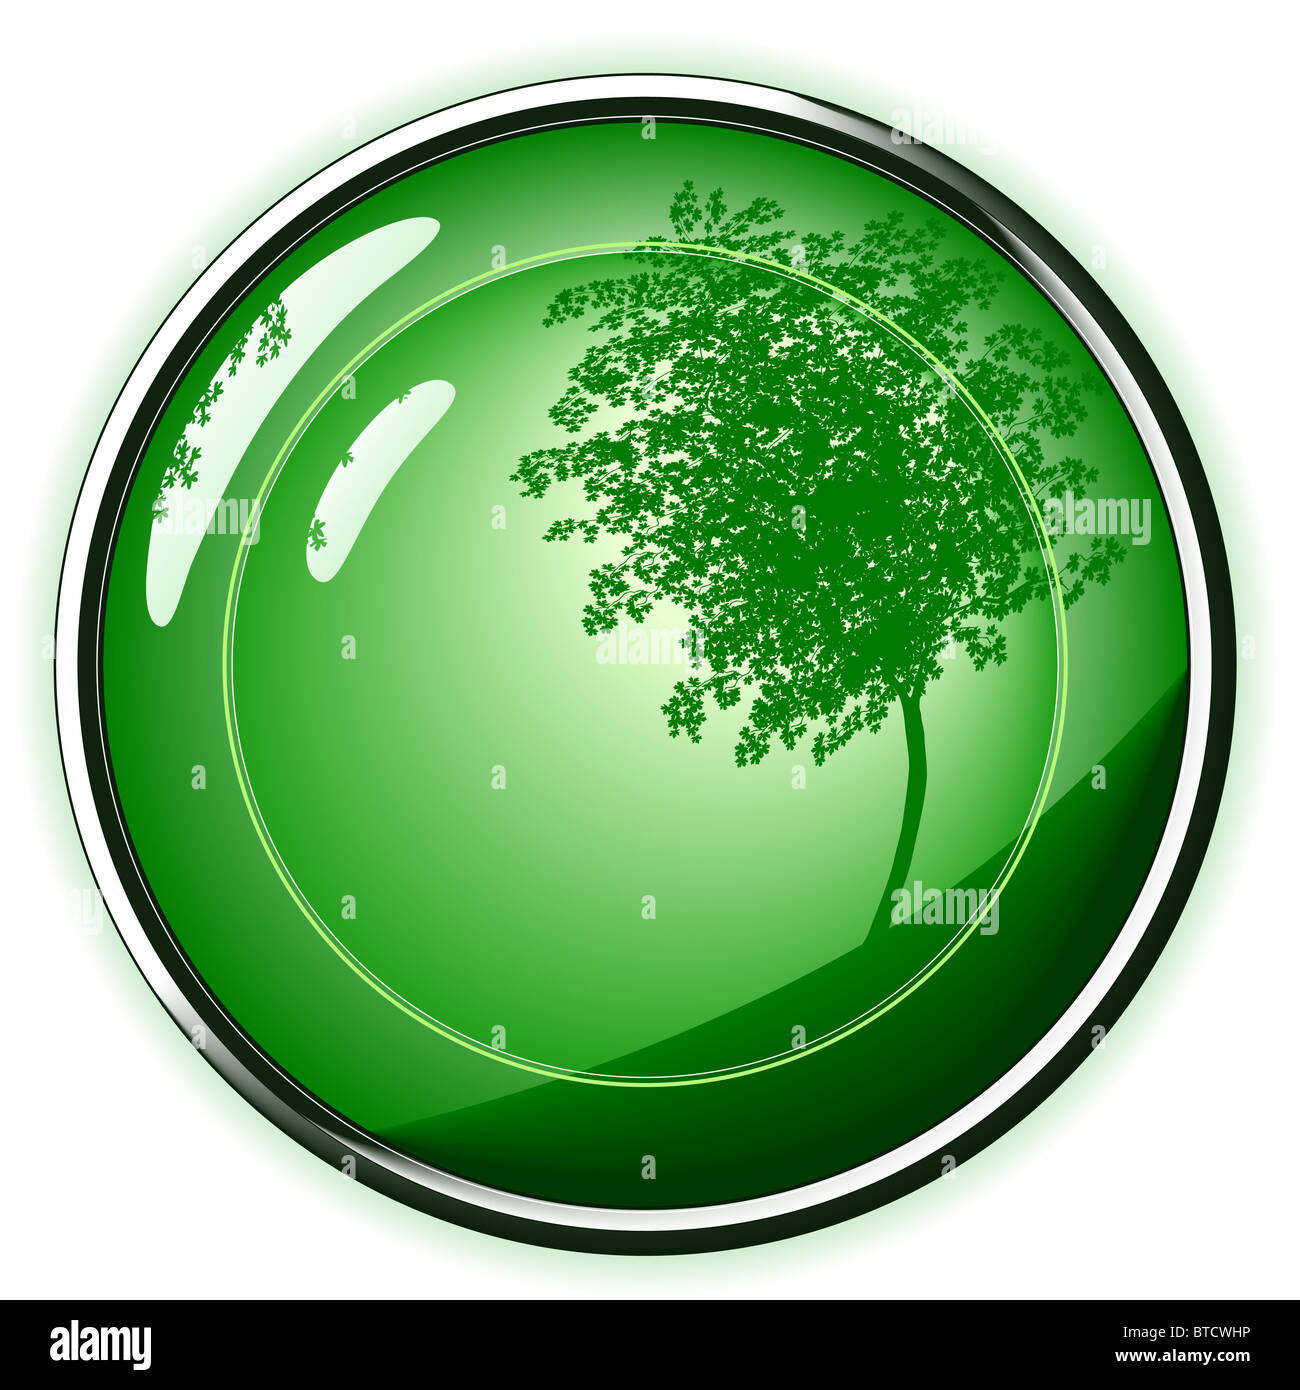 Botón web brillante ilustrado con silueta de árbol Foto de stock